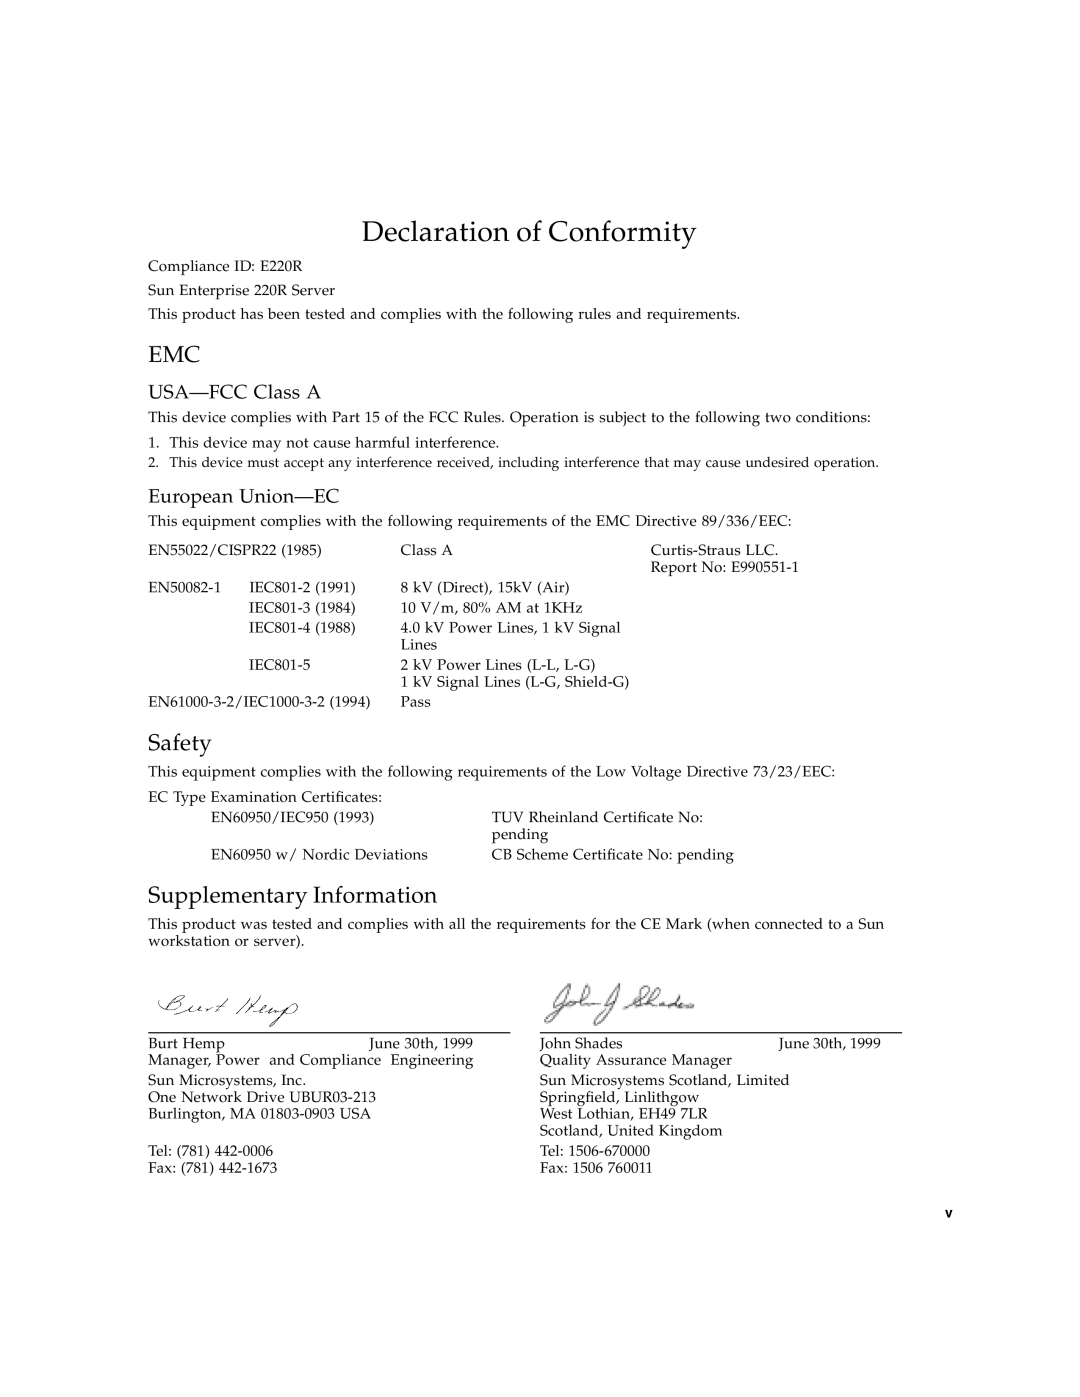 Sun Microsystems 220R Declaration of Conformity, Safety, Supplementary Information, USA-FCC Class A, European Union-EC 